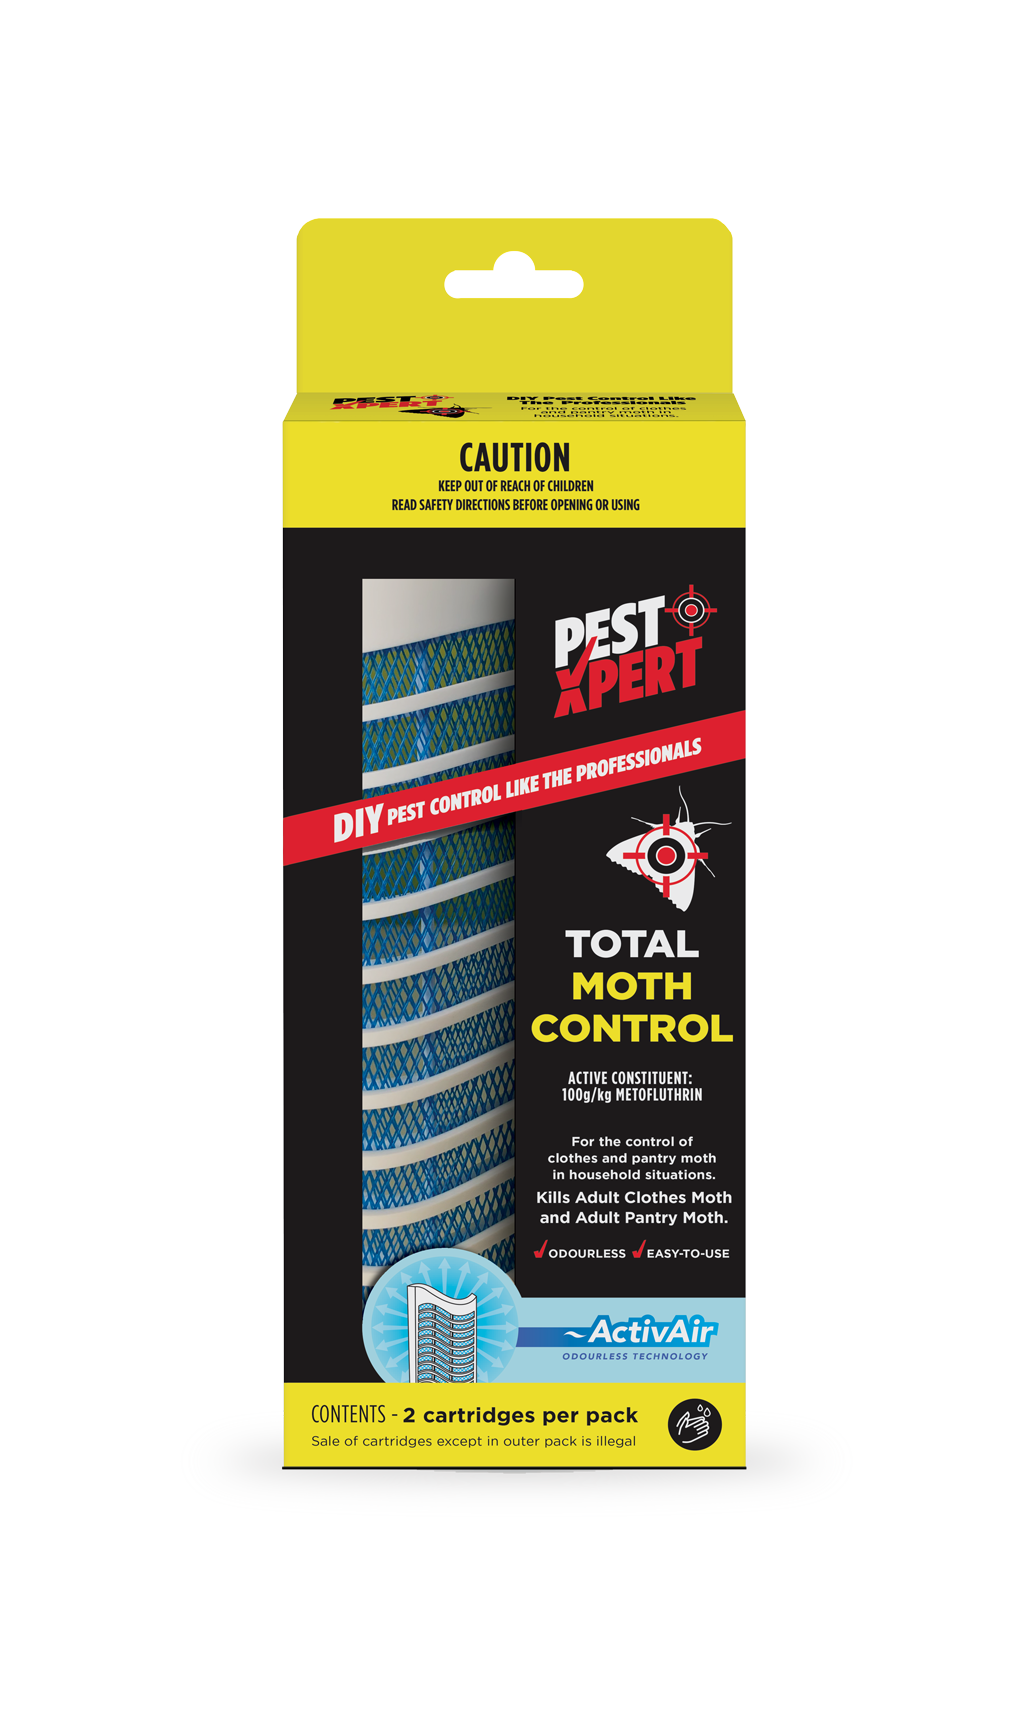 PestXpert Moth Control pack image